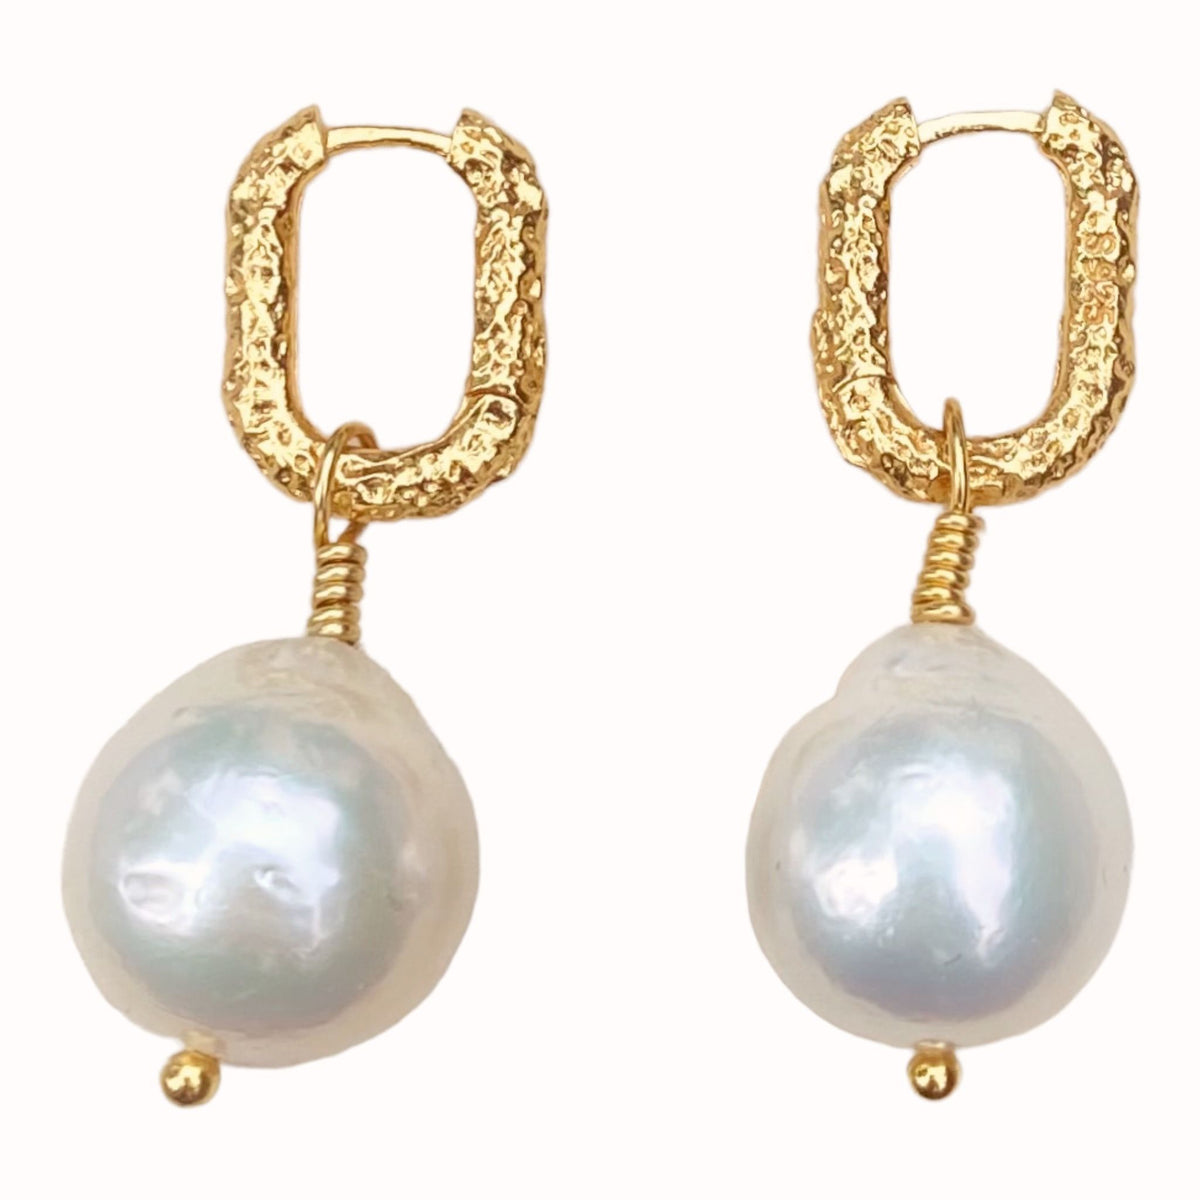 Freshwater Baroque Pearl Earrings on textured hoops the ultimate sophistication meets Scandinavian Minimalist Designs